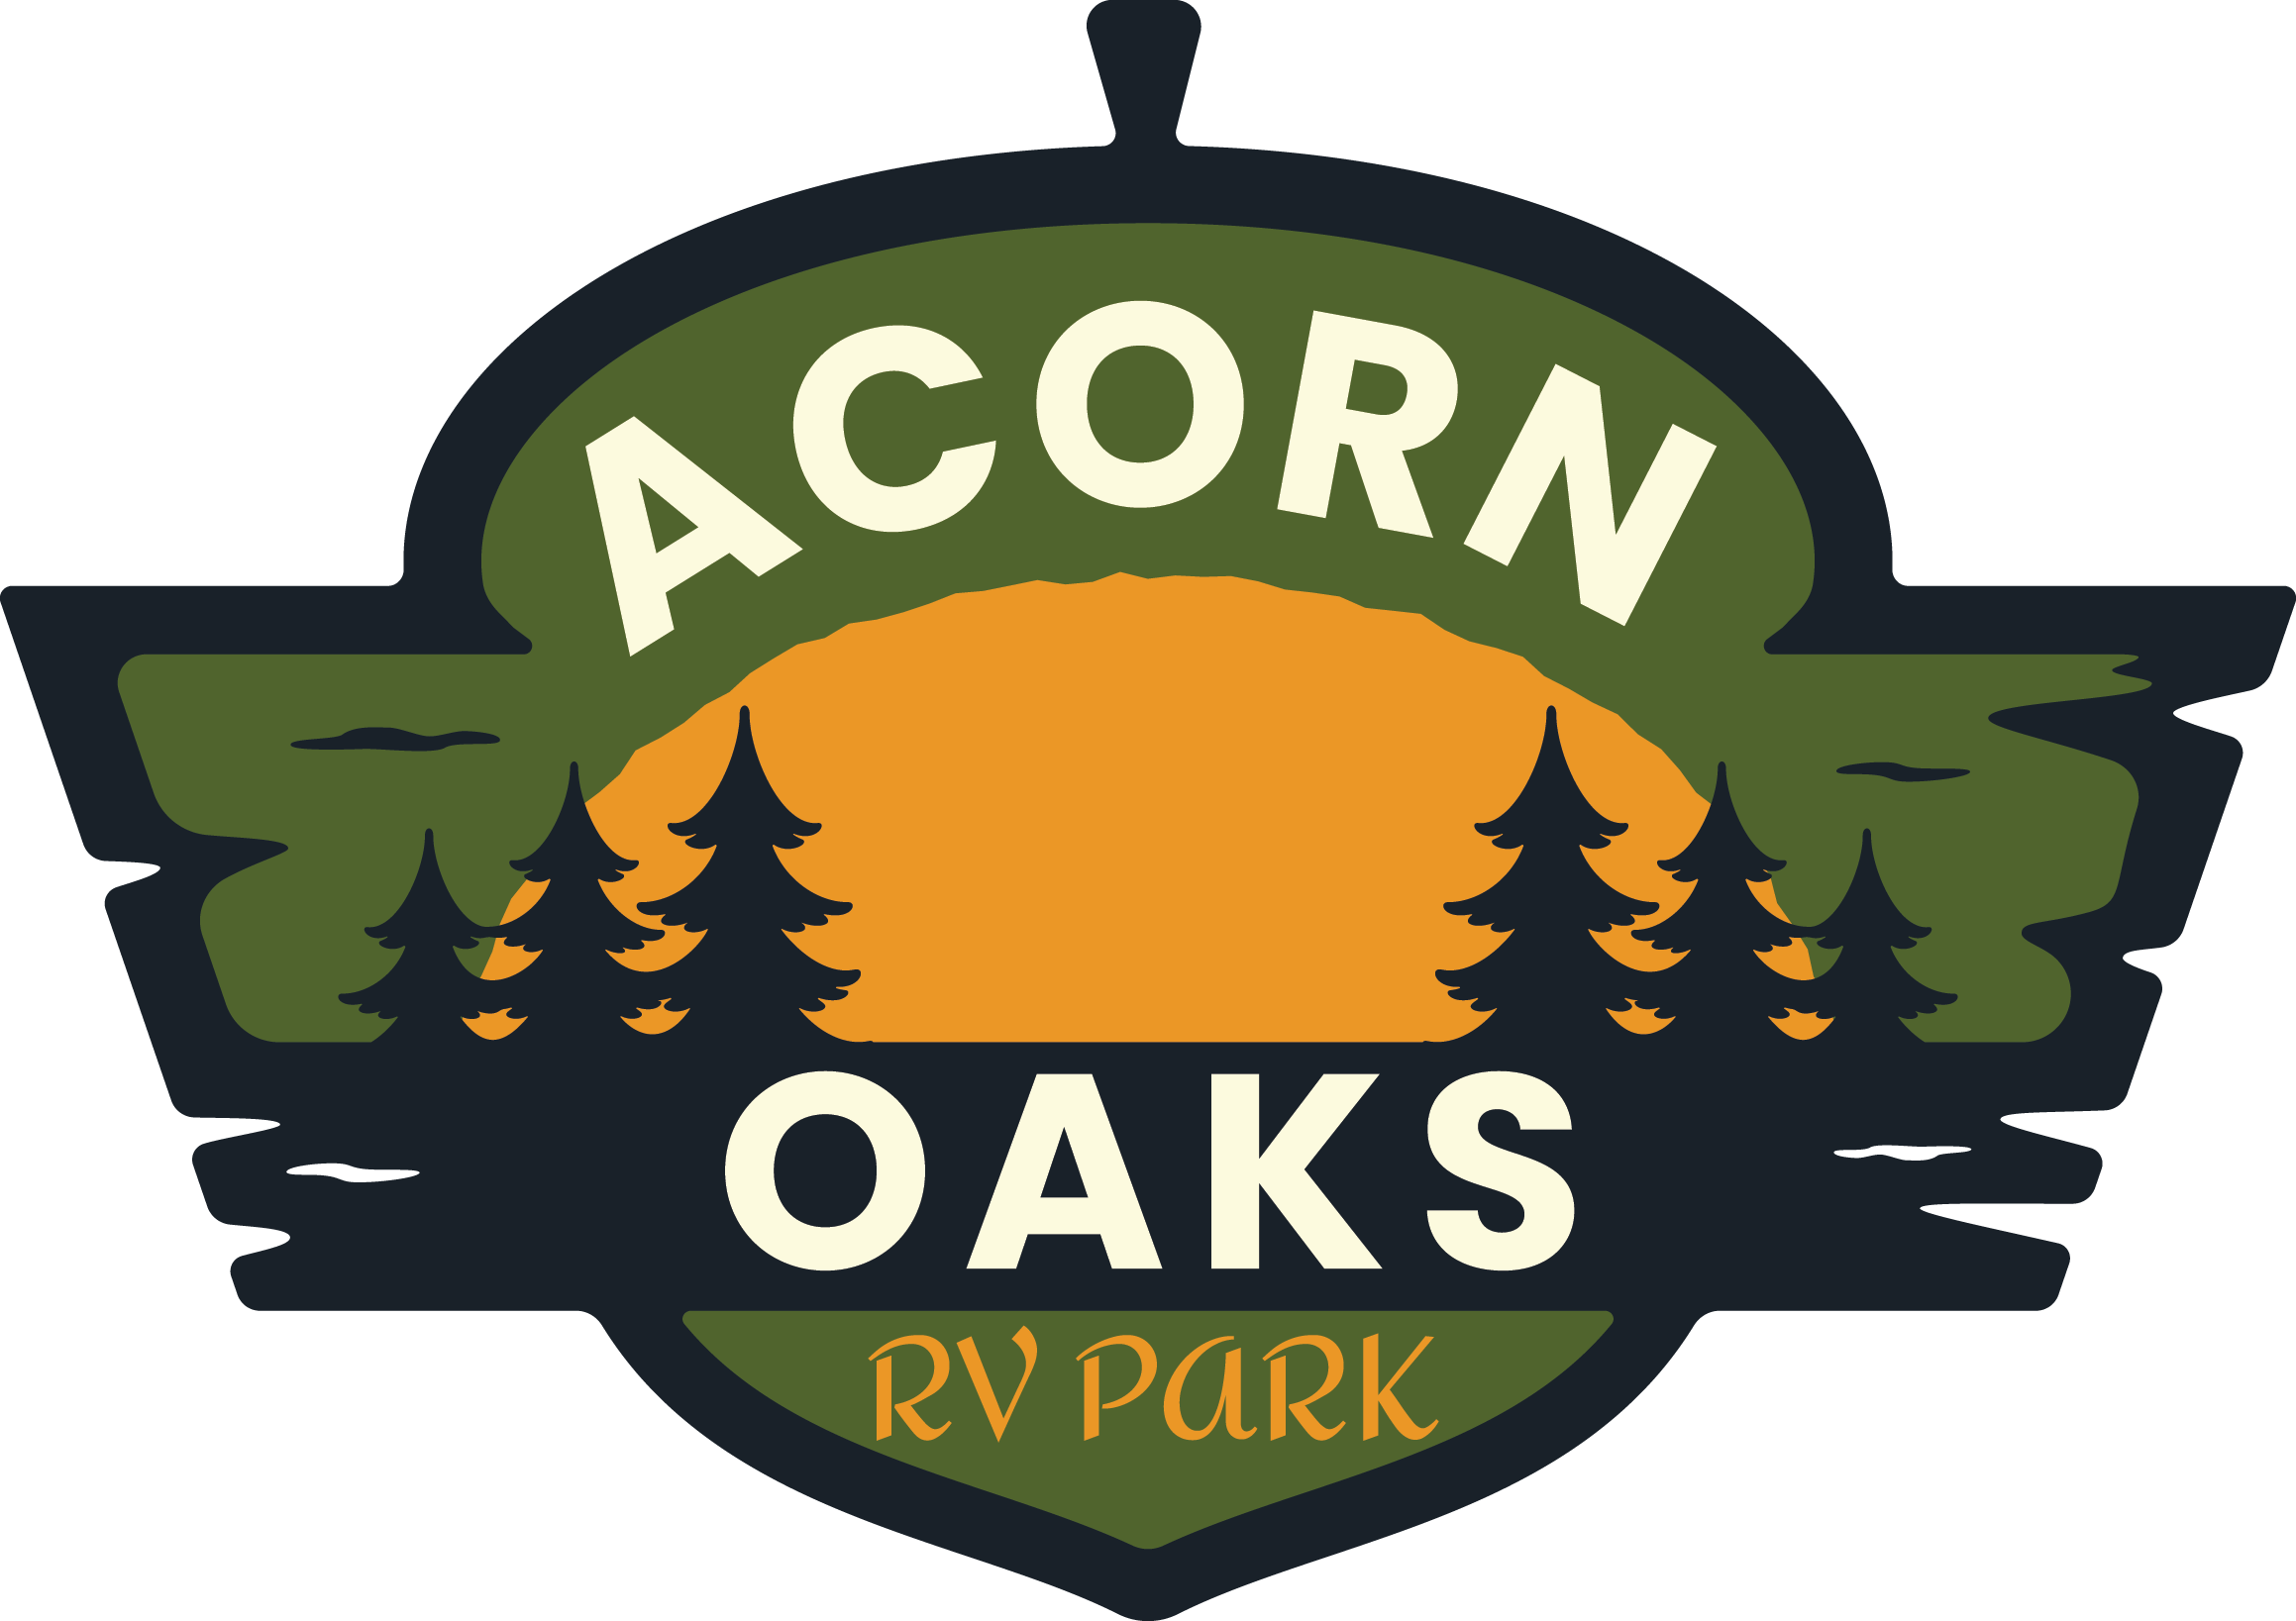 Acorn Oaks RV Park logo